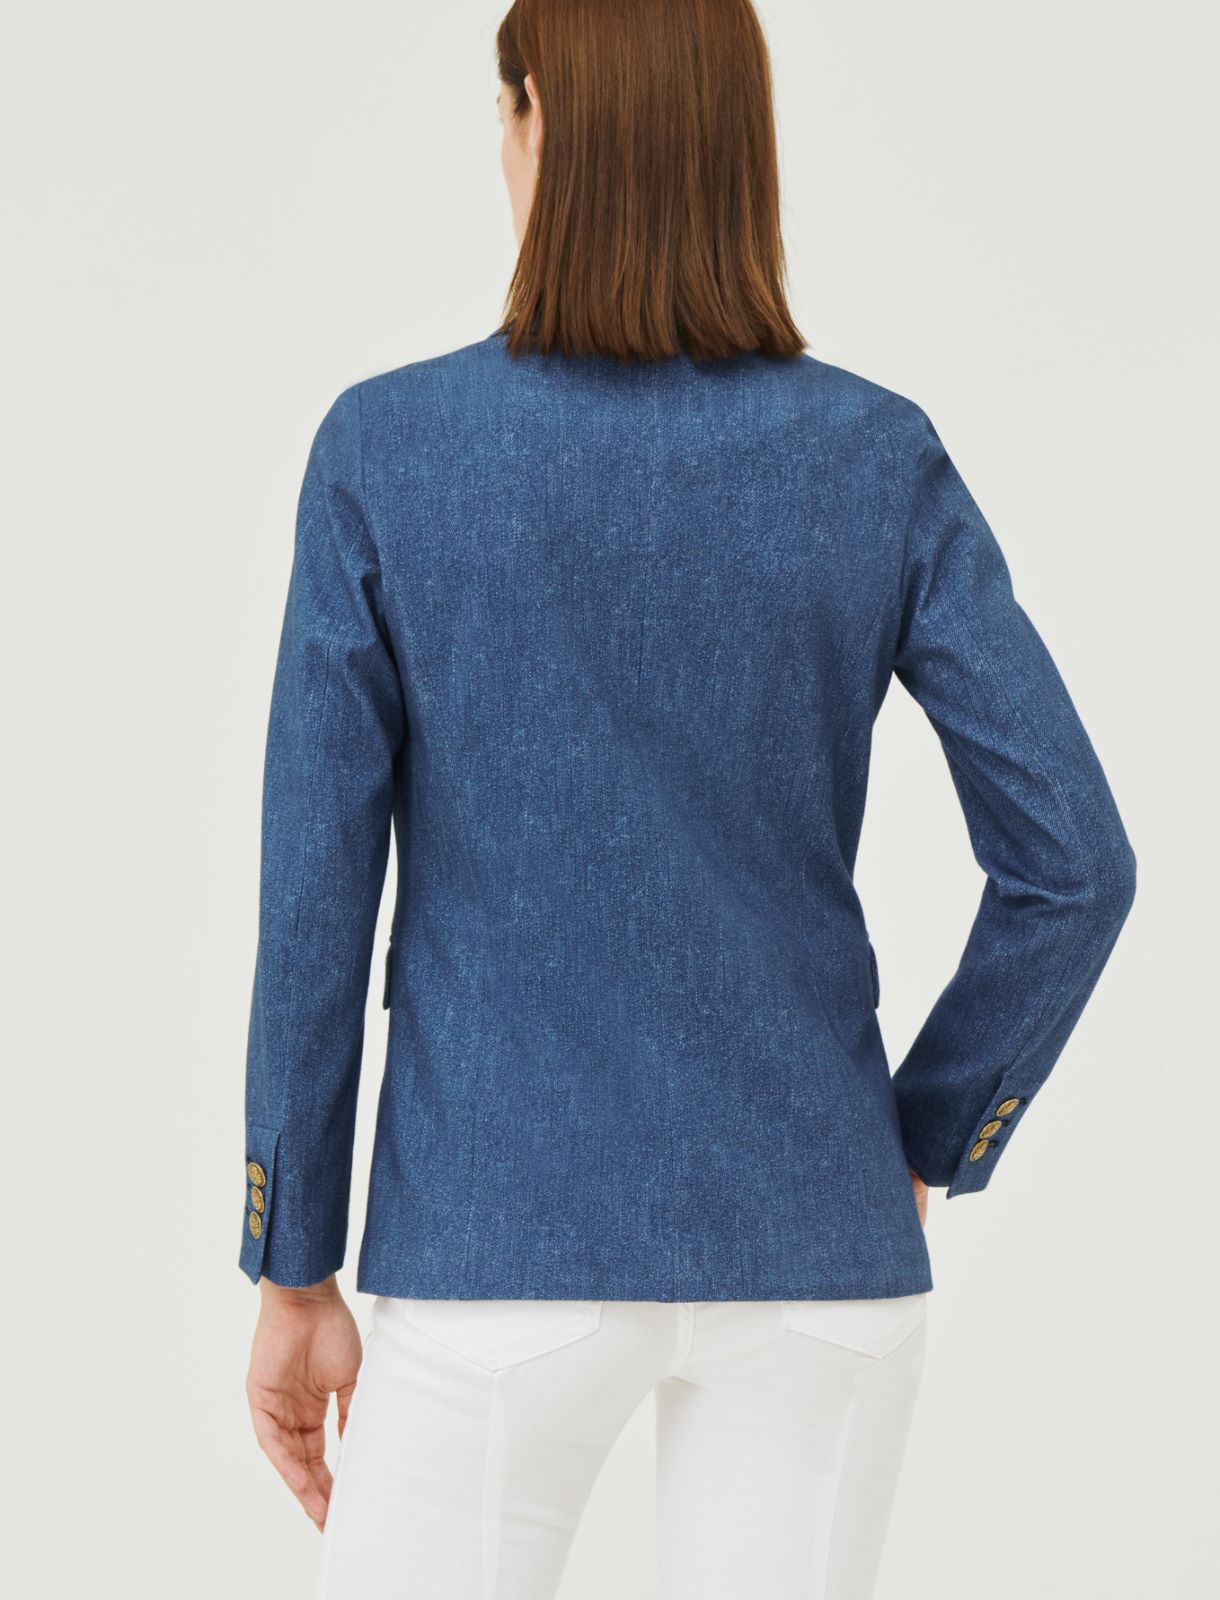 Patterned blazer - Cornflower blue - Marina Rinaldi - 2